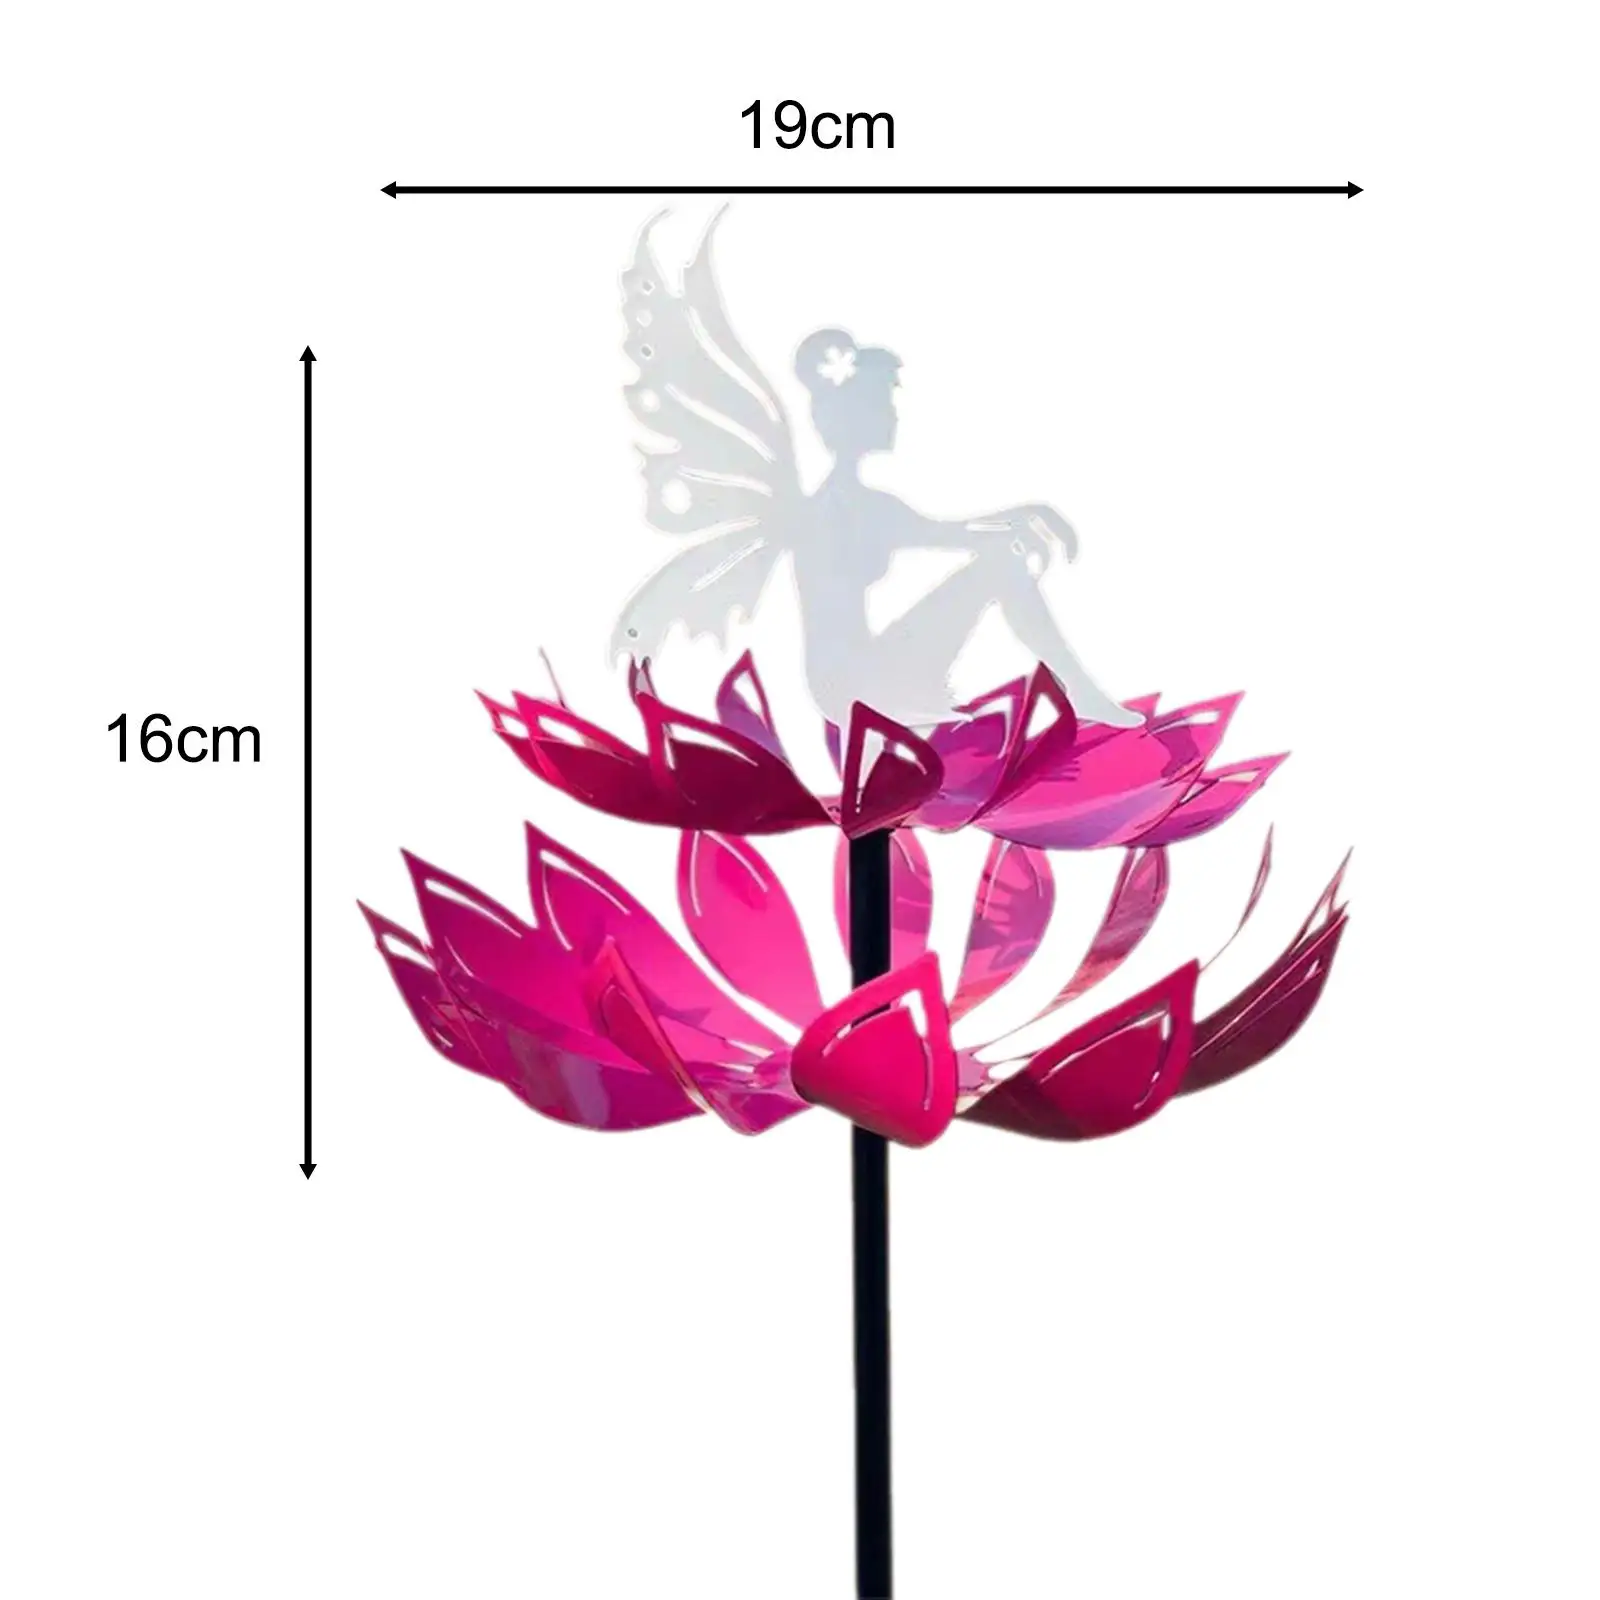 Garden Flower Fairy Sculpture Wind Spinner Accessory Flower Diameter 19cm Total Length 65cm for Yard Lawn Terrace Metal Windmill